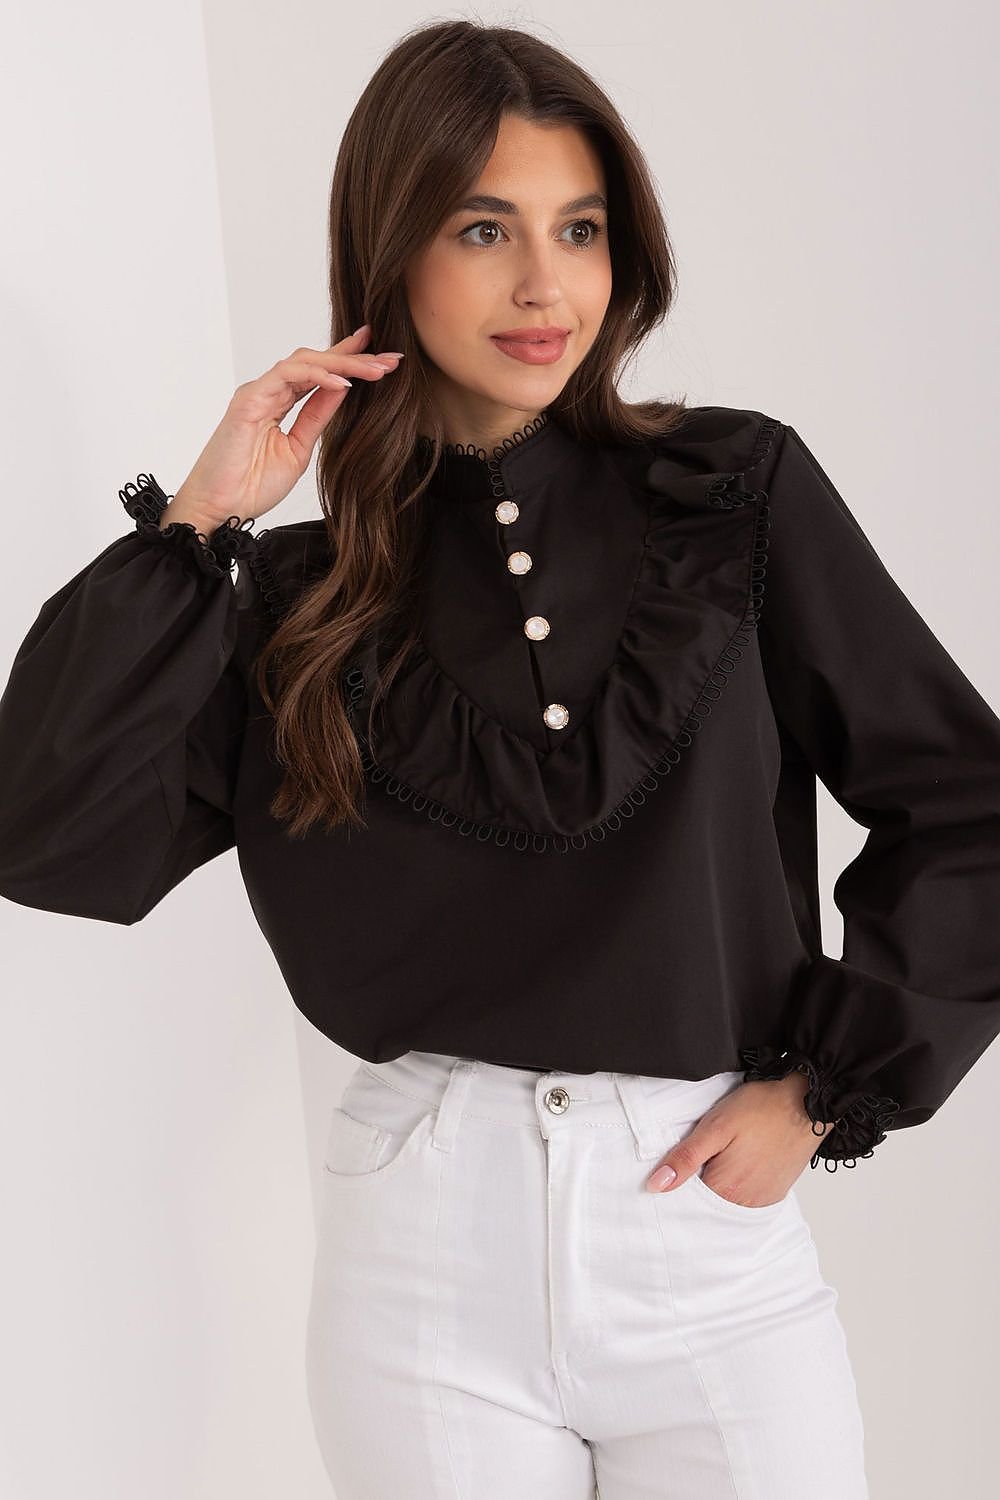 Stand-up collar elegant black blouse